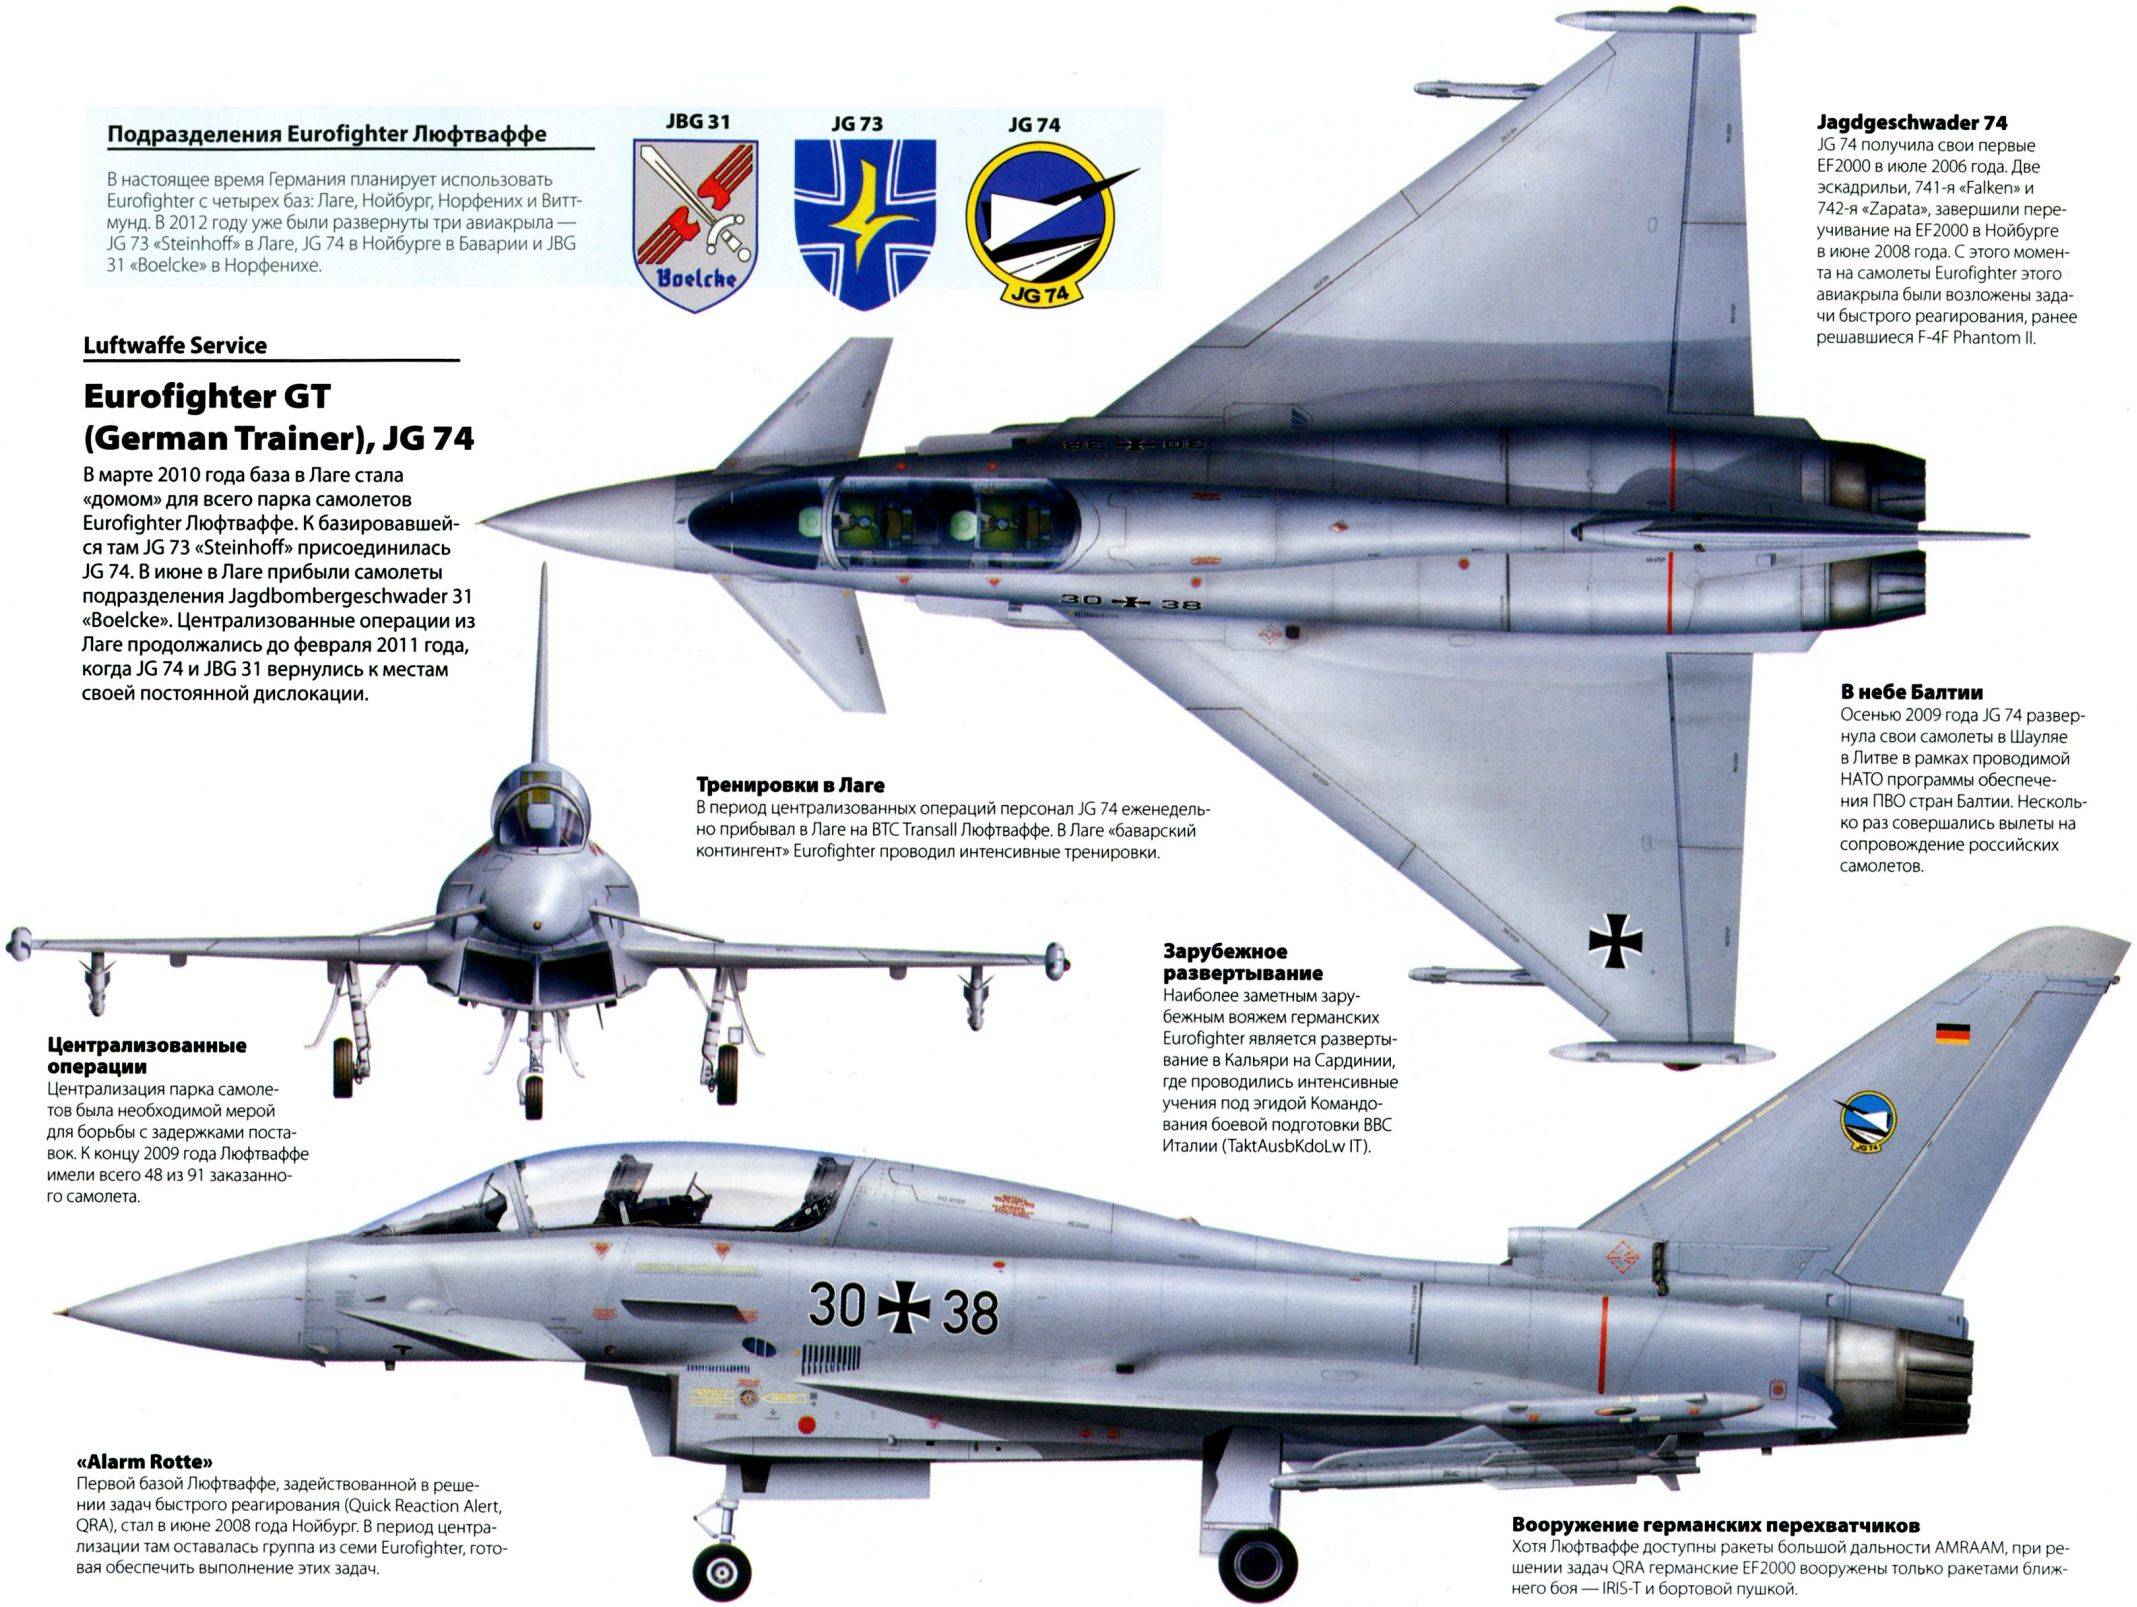 Eurofighter typhoon fgr4 он же ef2000